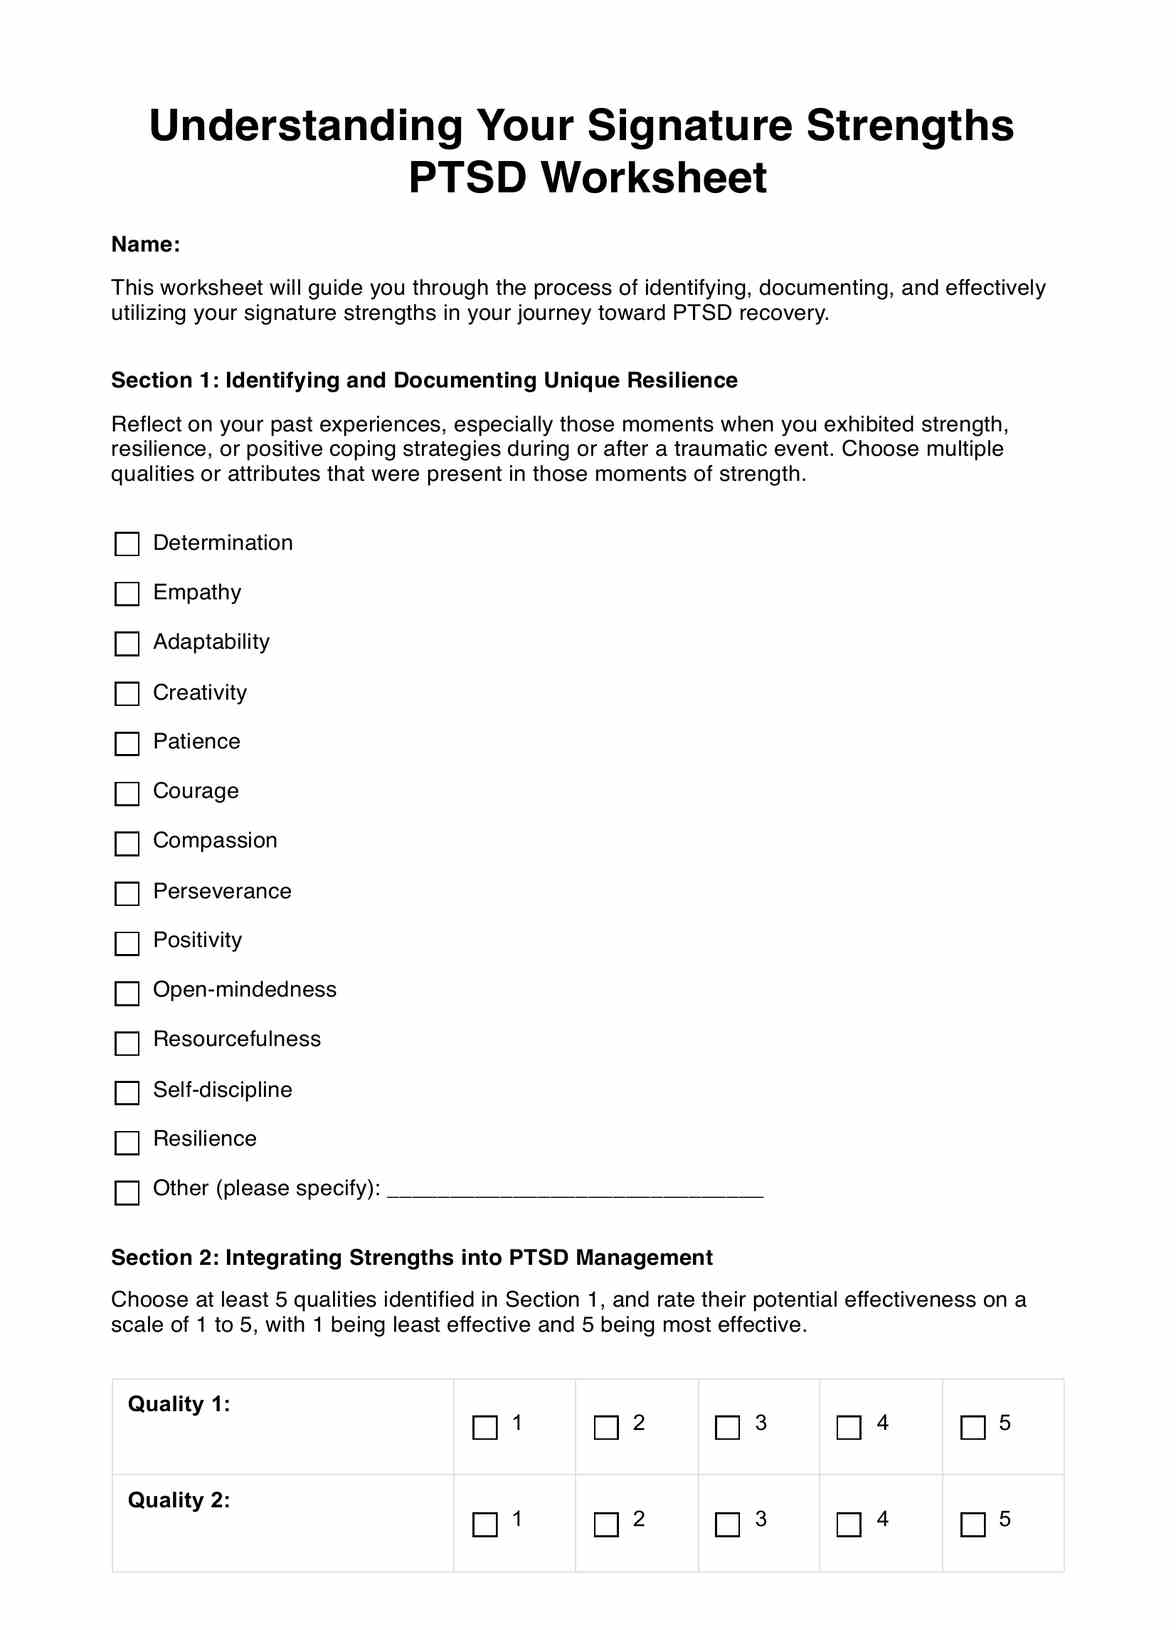 Understanding Your Signature Strengths PTSD Worksheet PDF Example